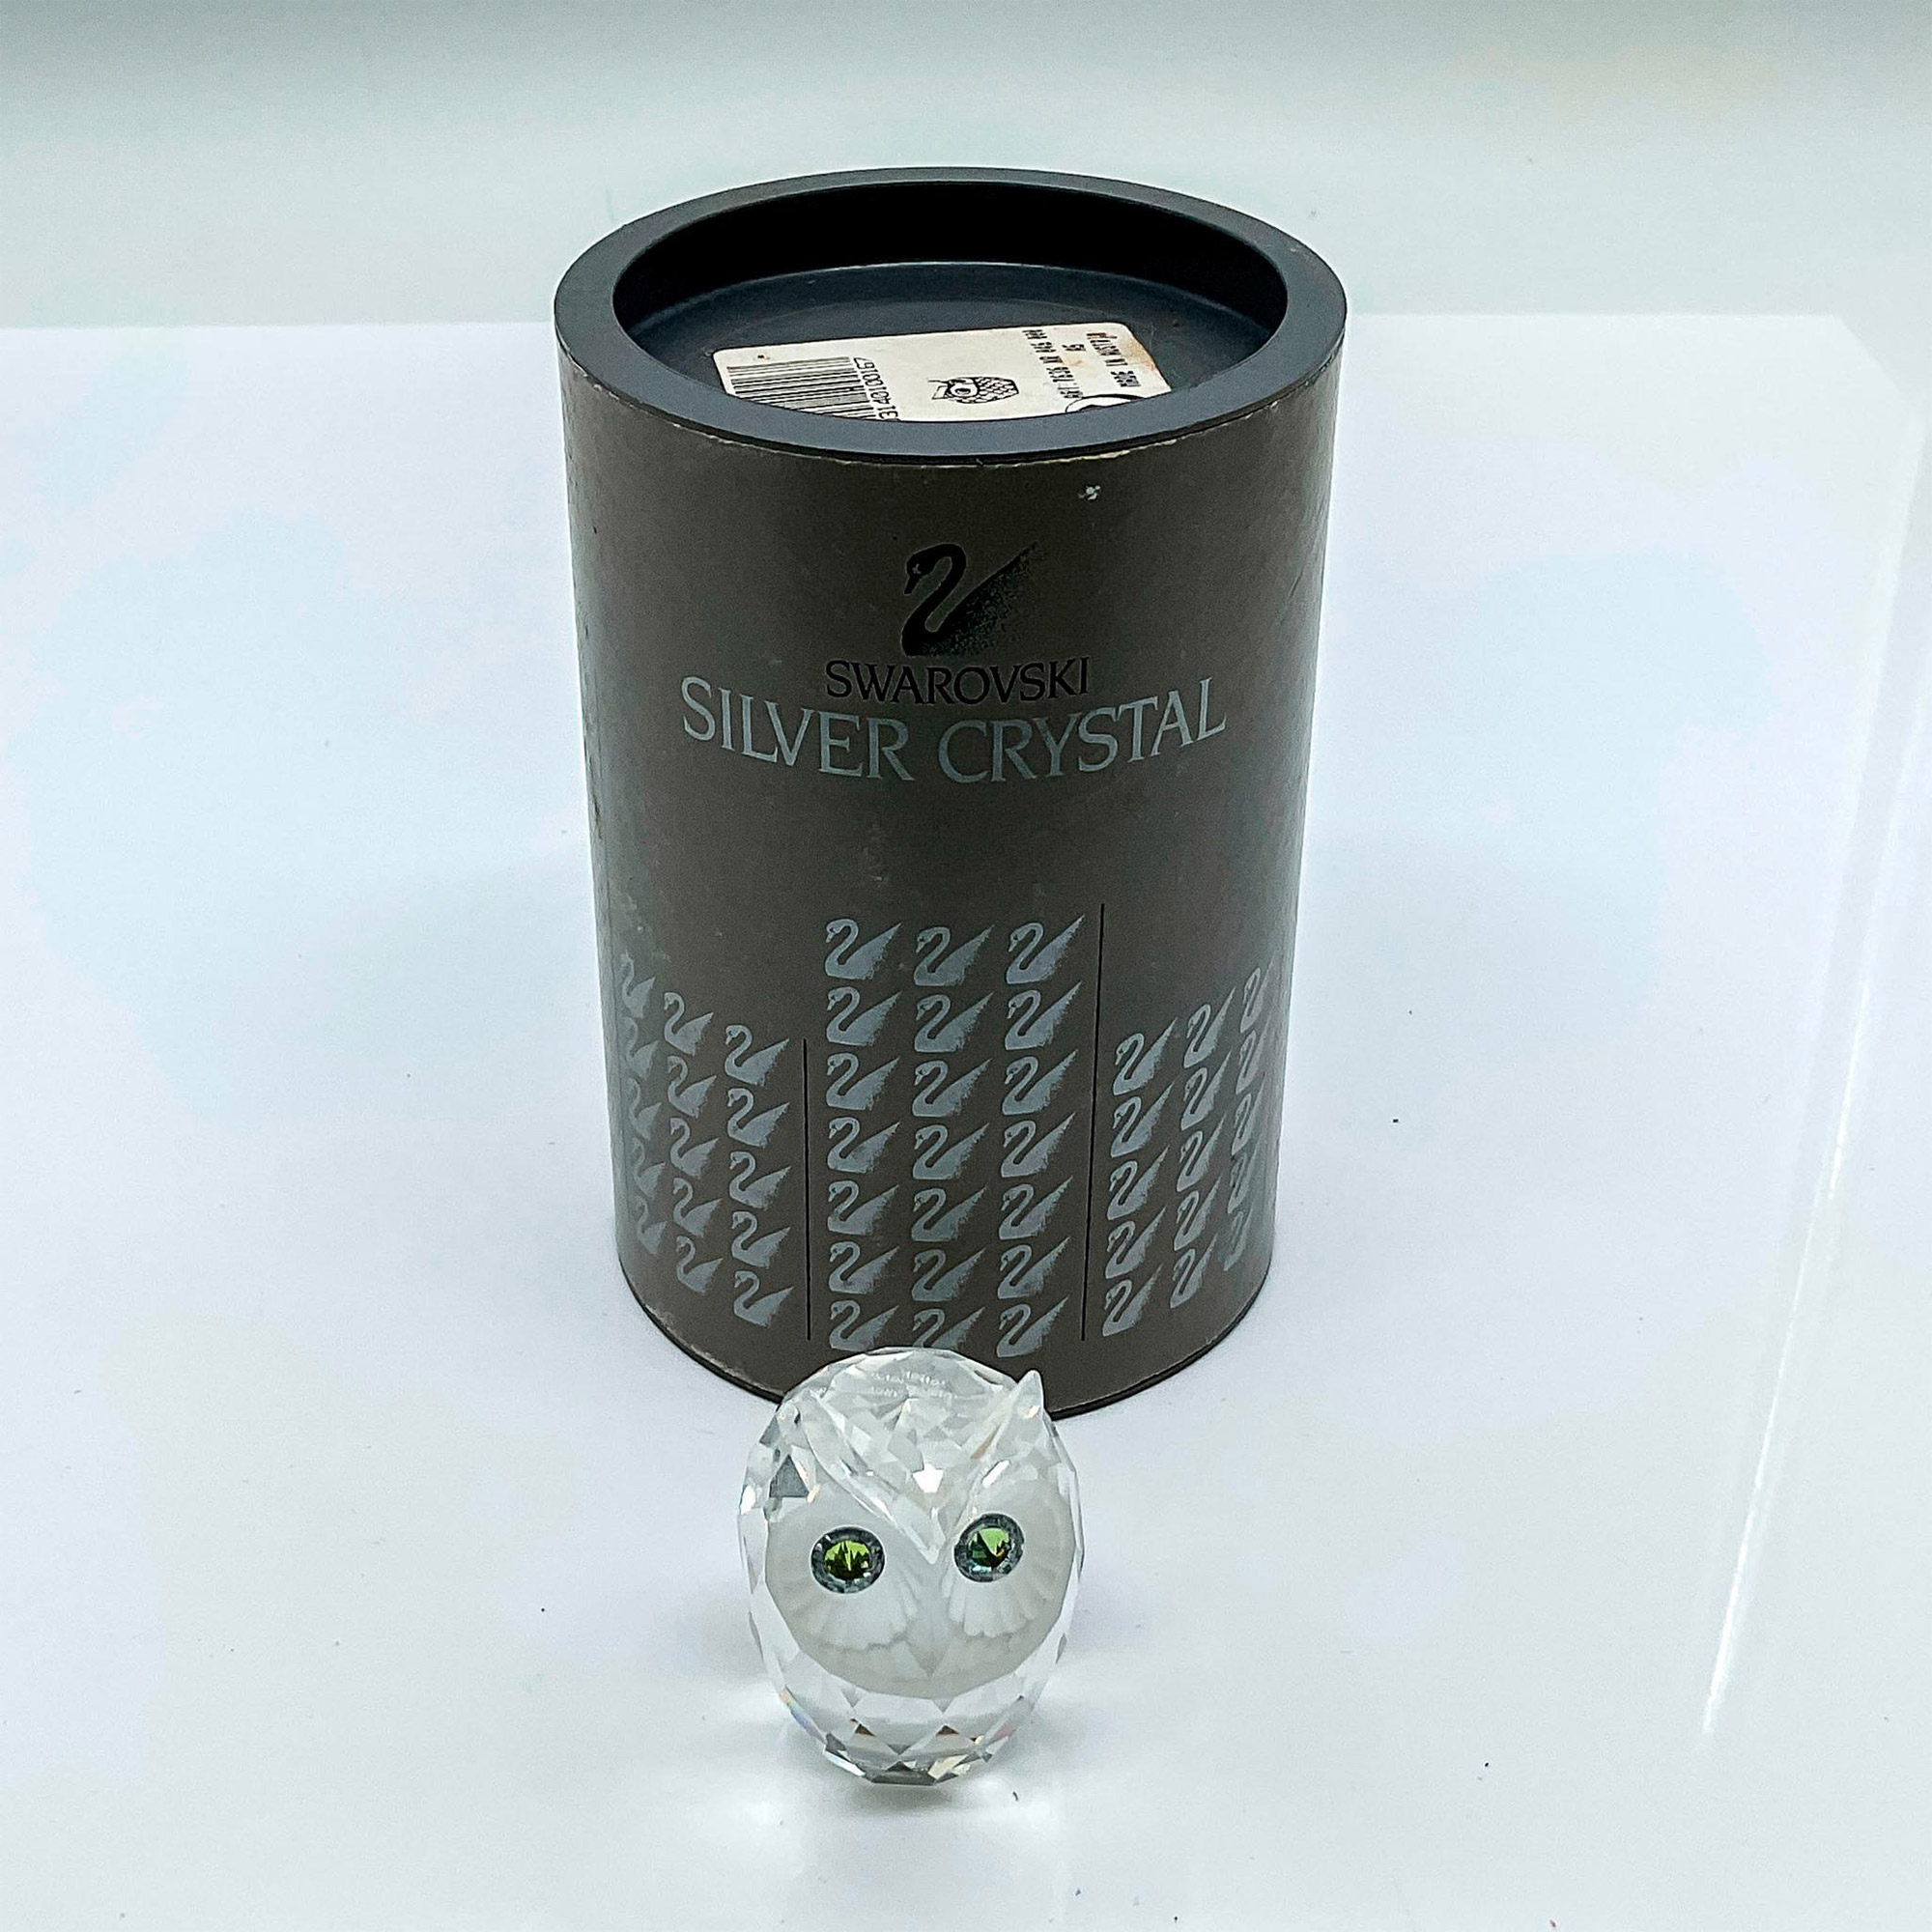 Swarovski Silver Crystal Figurine, Small Owl - Image 4 of 4